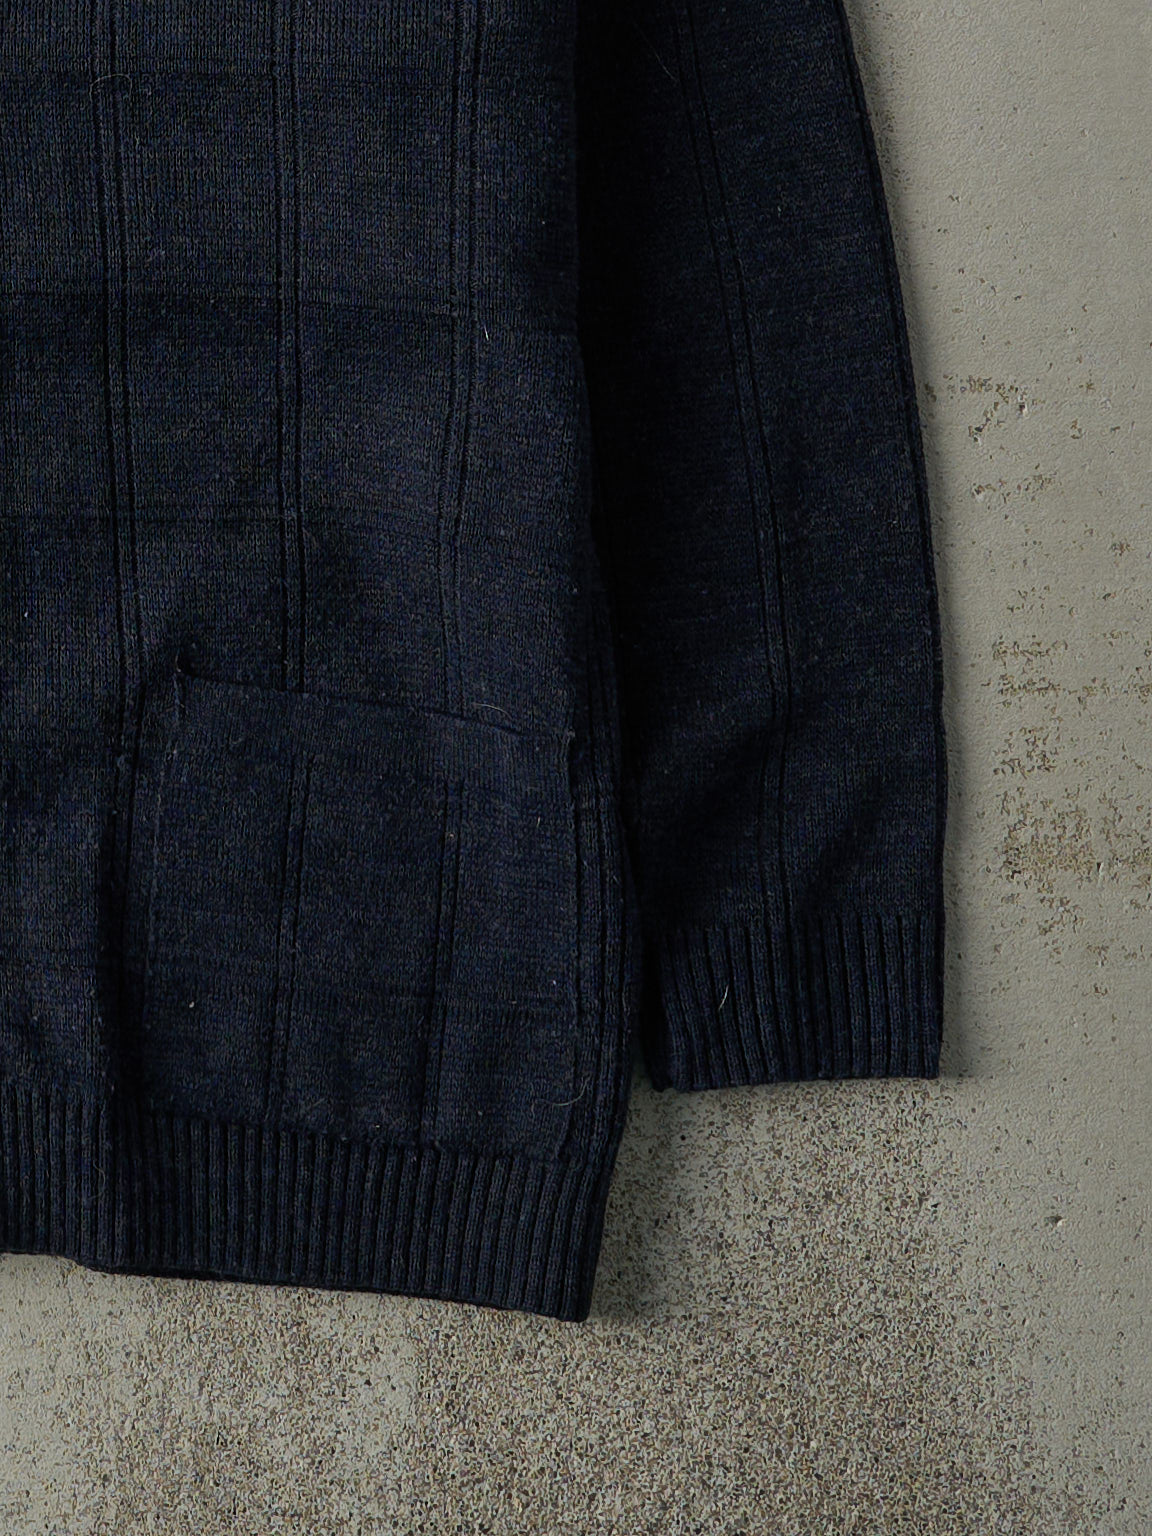 Vintage 90s Navy Blue Patterned Knit Cardigan (M)